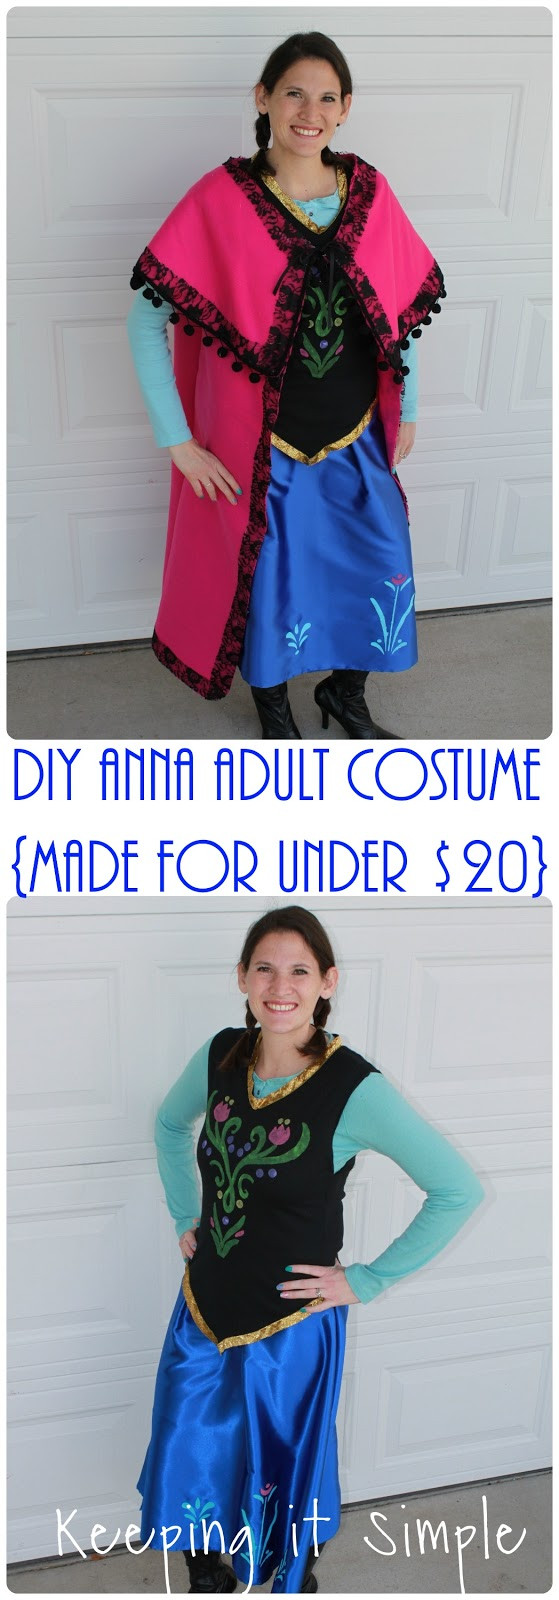 Best ideas about DIY Anna Costume
. Save or Pin Disney Frozen Halloween Costume DIY Anna Frozen Adult Now.